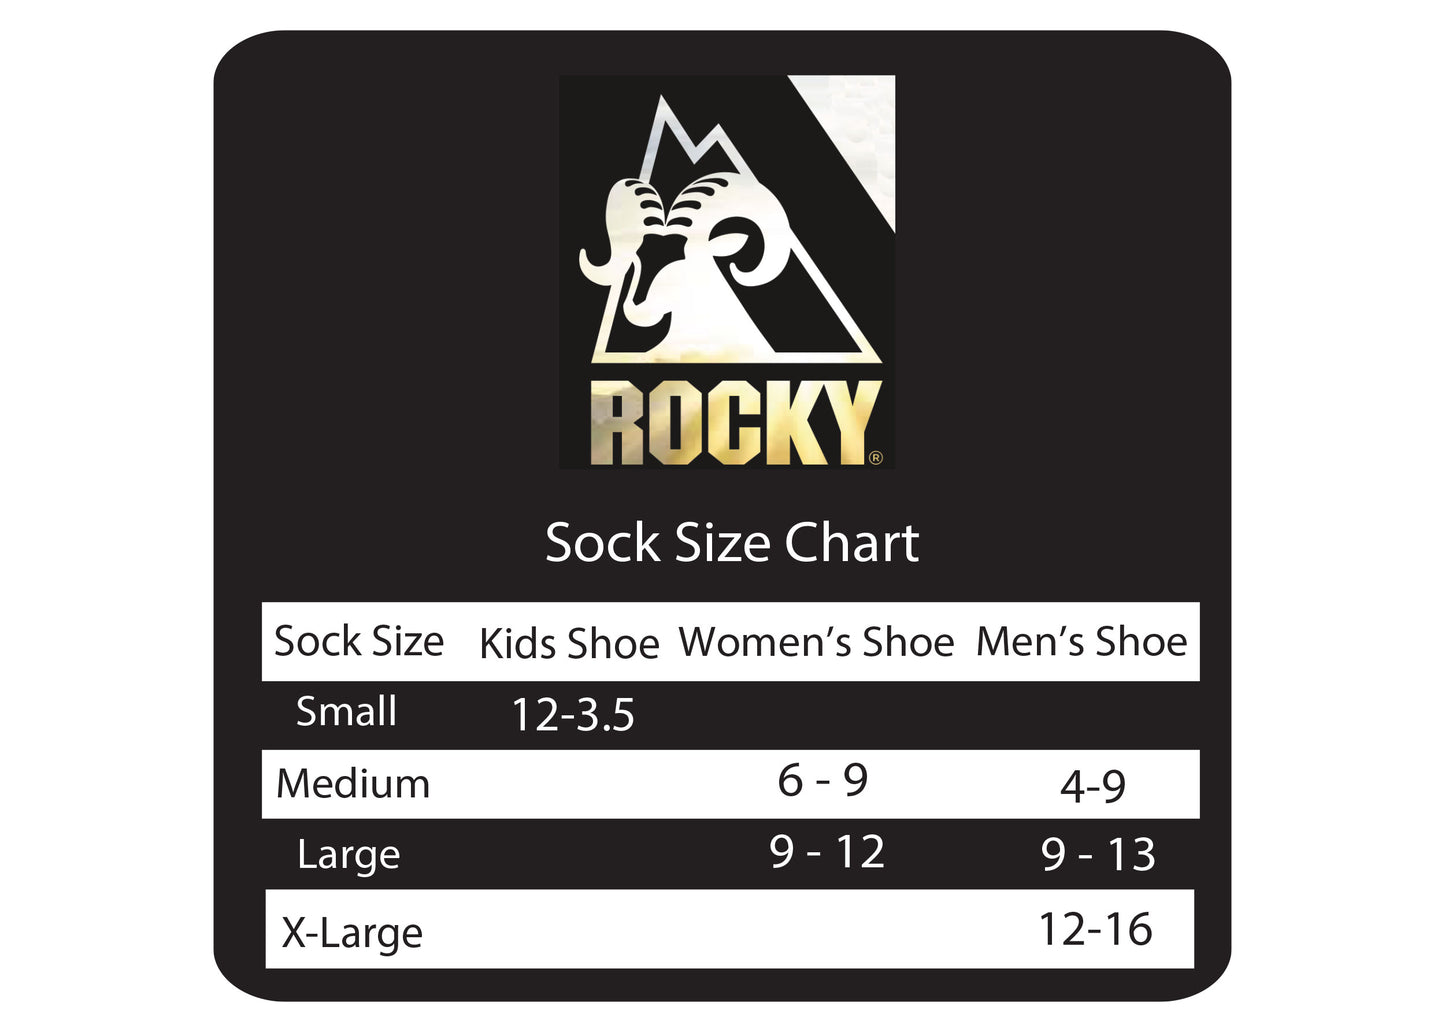 Rocky Mens Non Binding Merino Wool Blend Boot Socks 1 Pair Pack